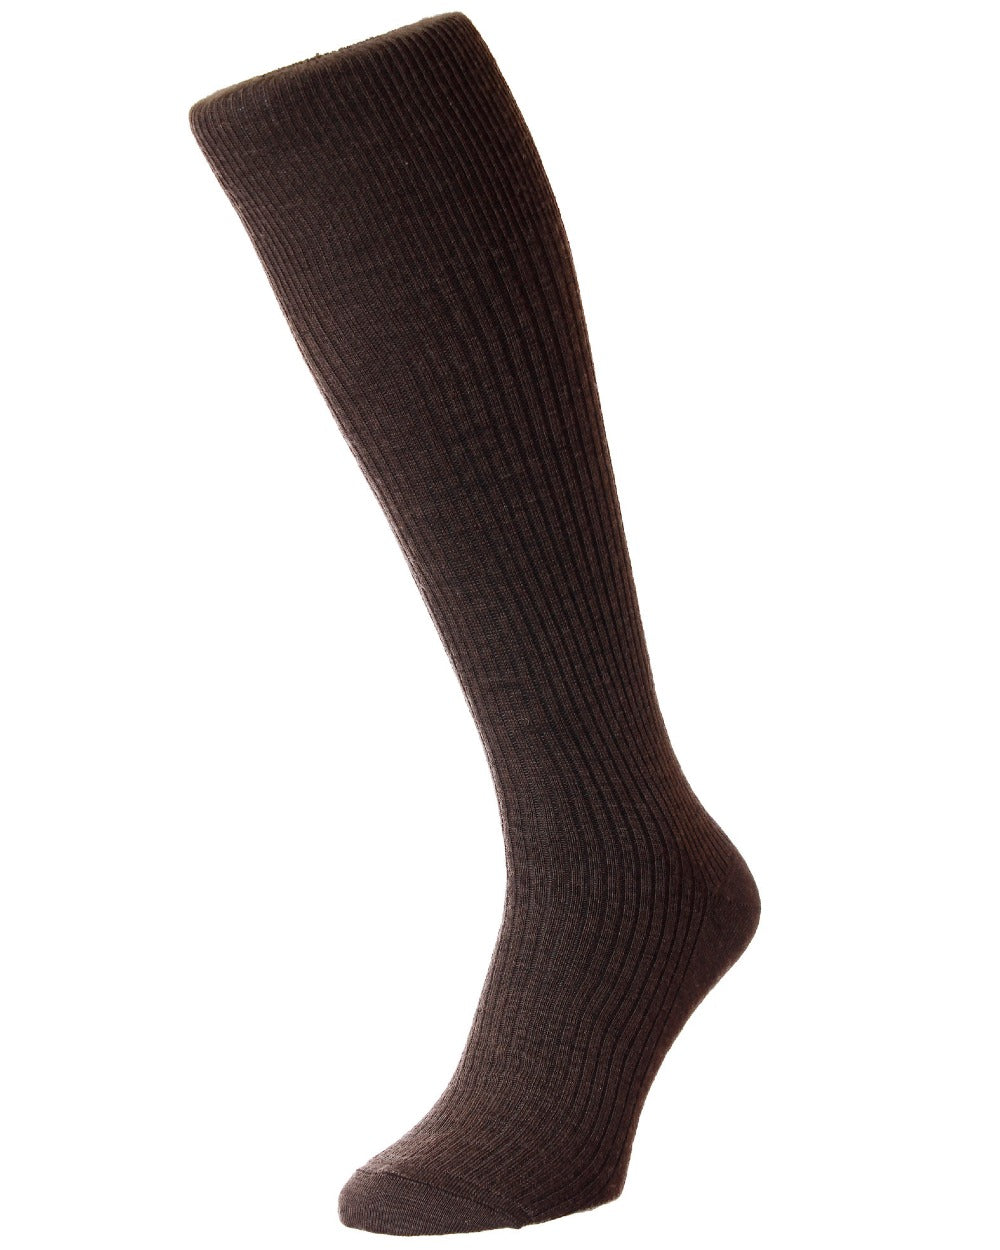 HJ Hall Wool Rich Immaculate Long Socks in Dark Brown 